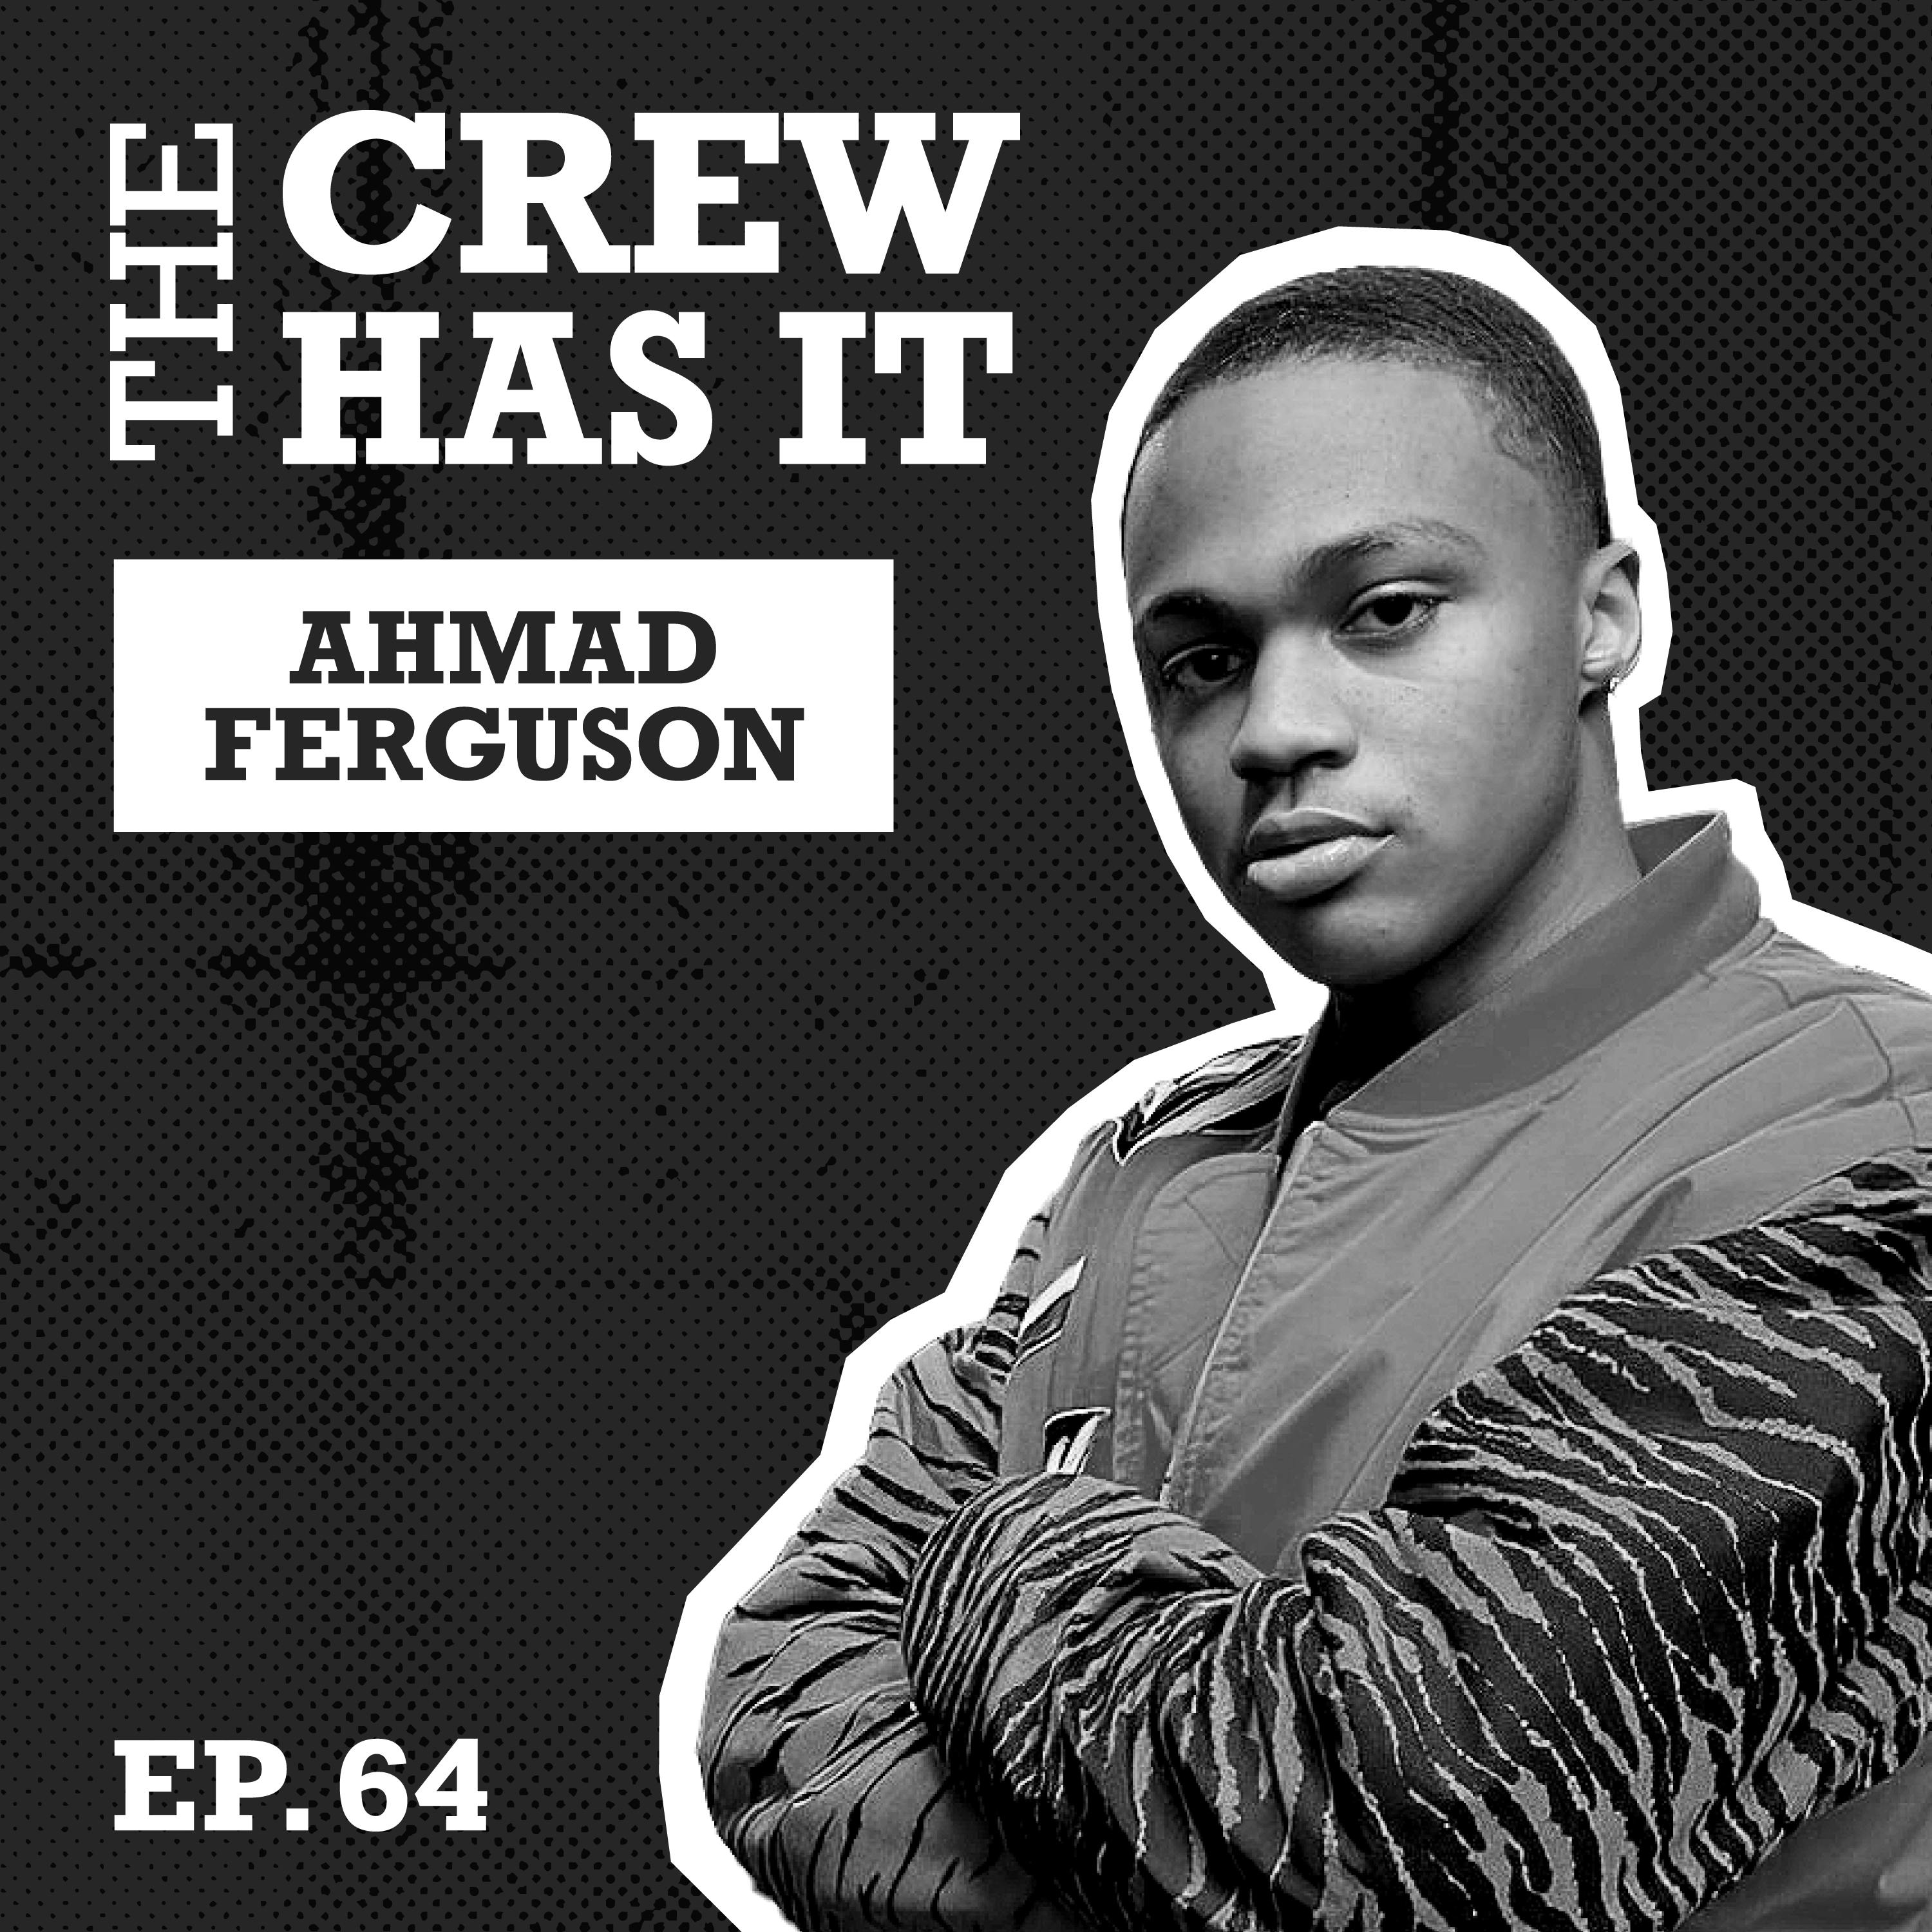 Ahmad Ferguson talks Power IV: Force, upbringings & The Chi | Ep 64 | The Crew Has It